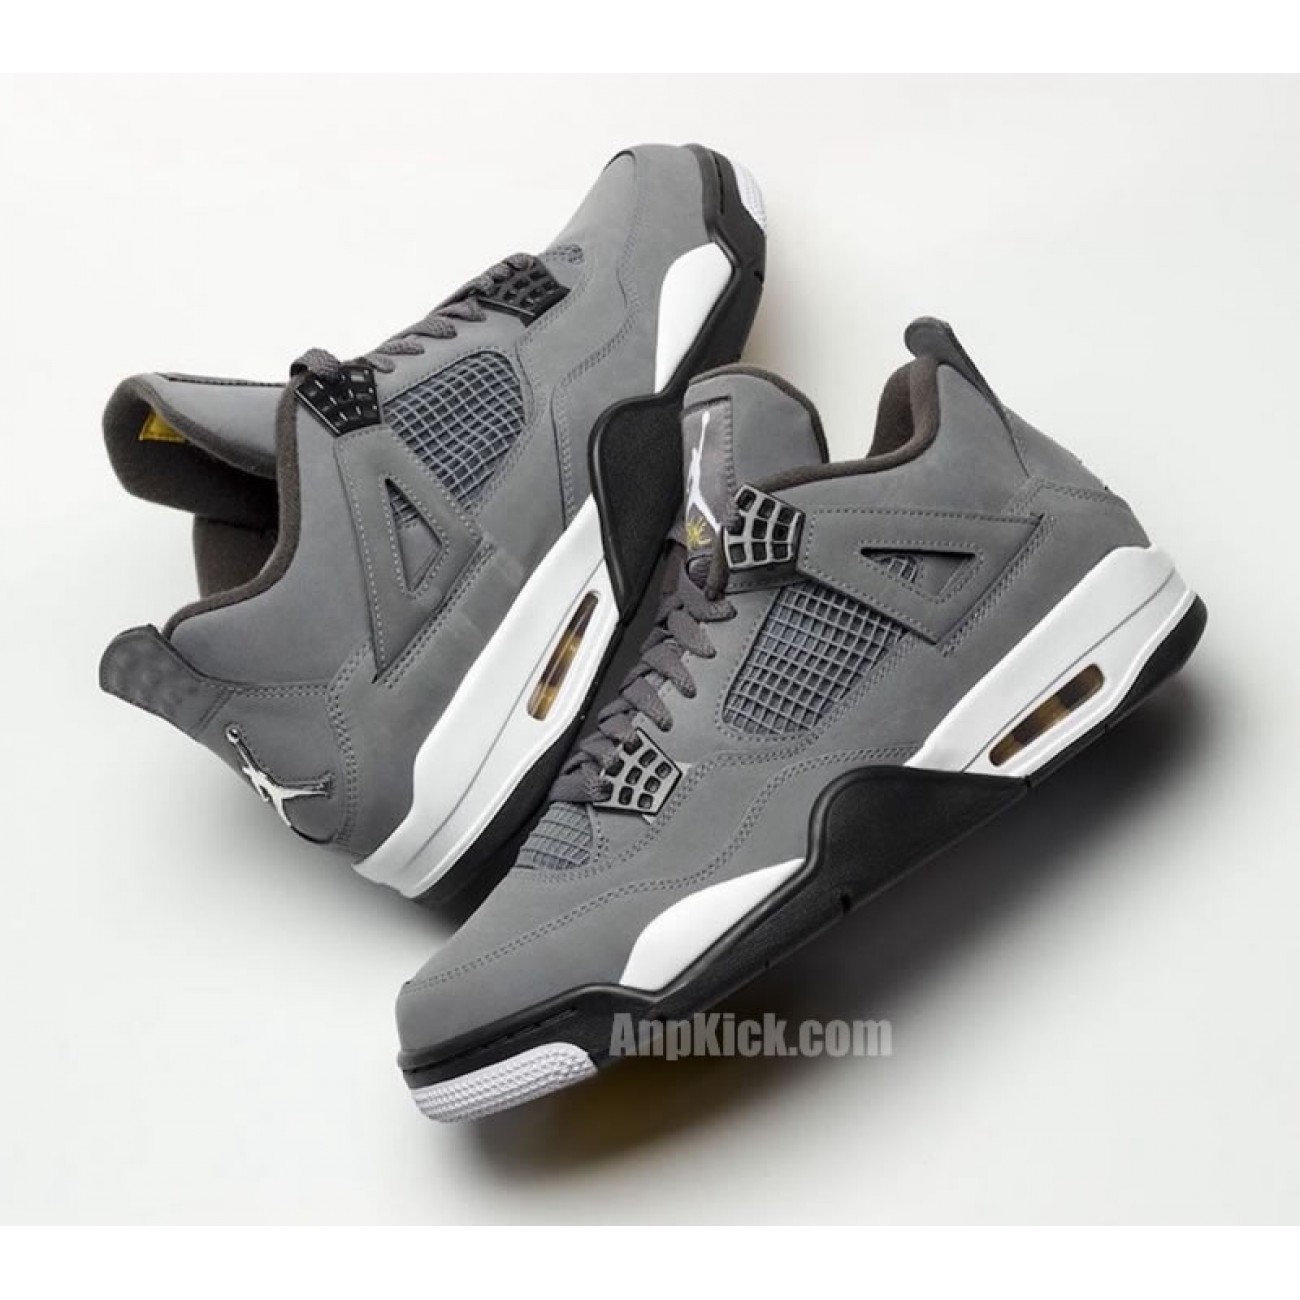 Air Jordan 4 "Cool Grey" 2019 On Feet Release Date 308497-007